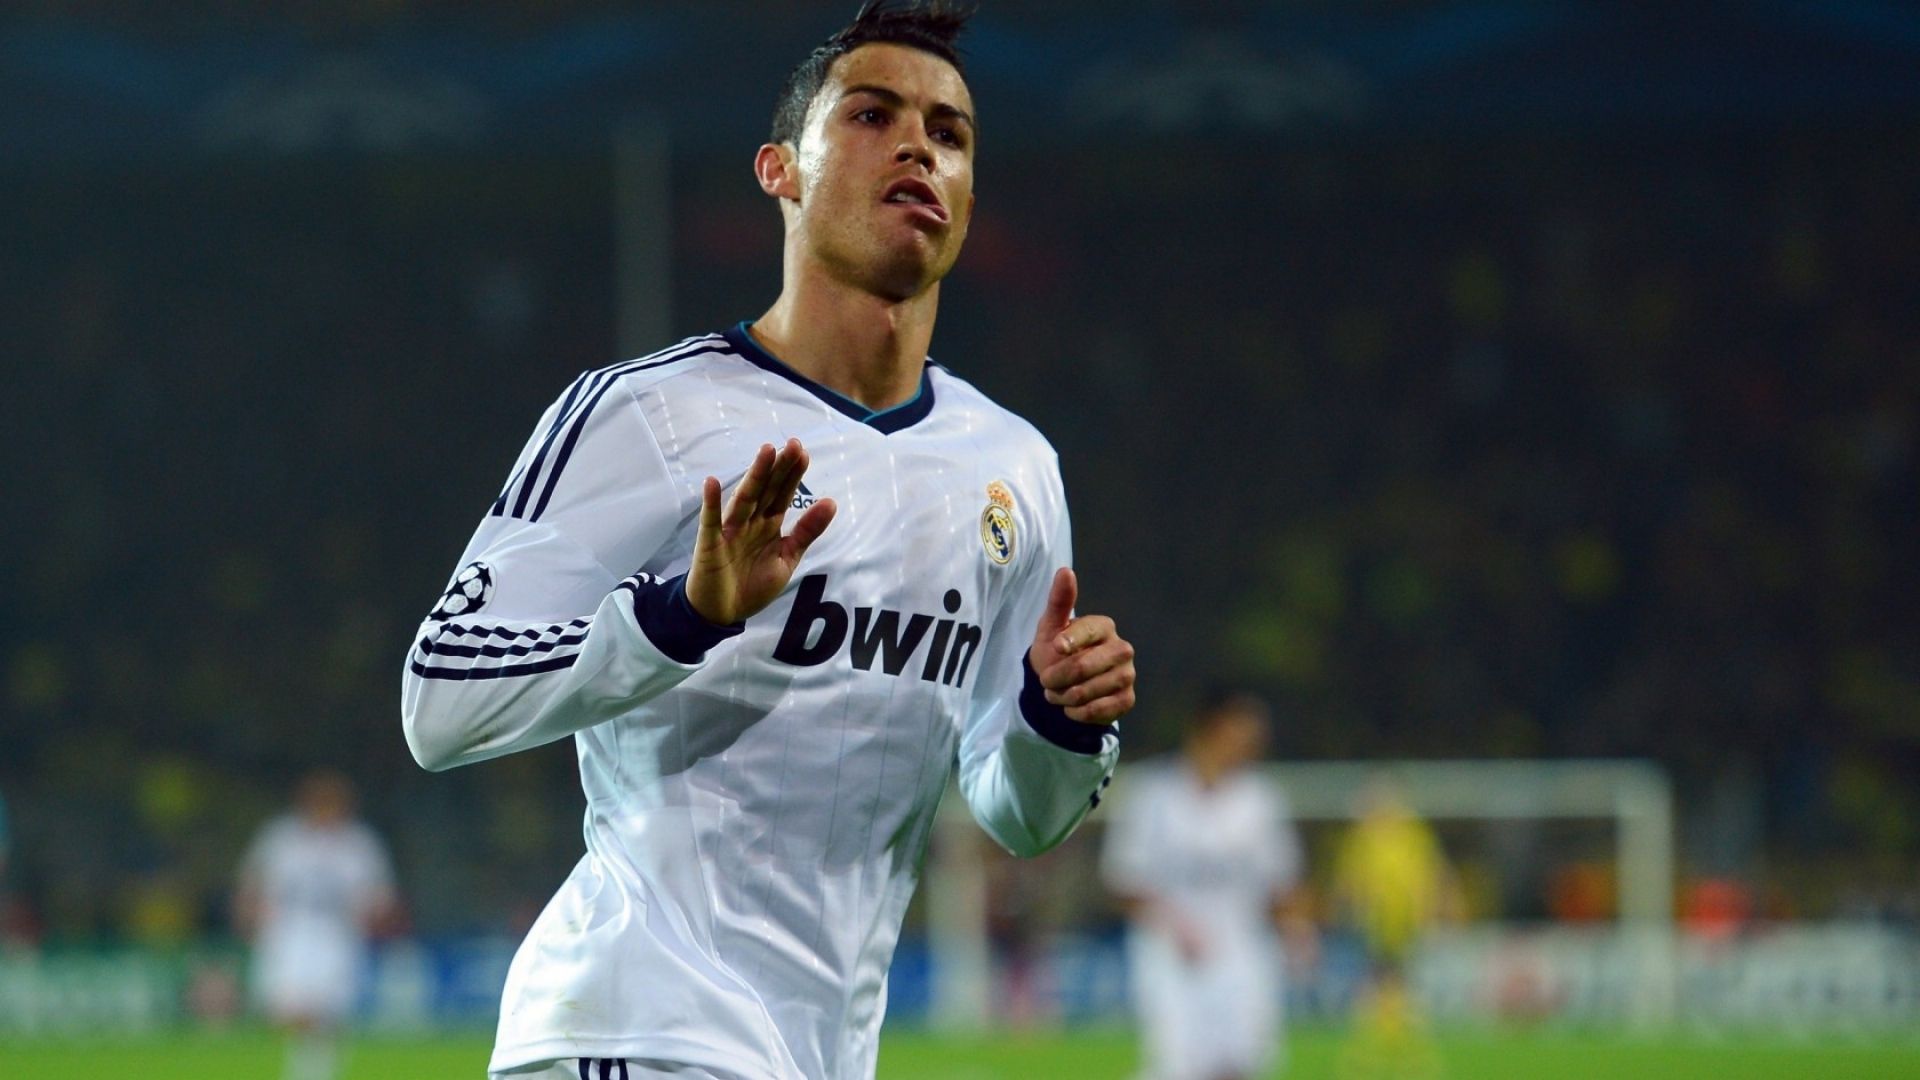 Free download Wallpaper Cristiano Ronaldo Real Madrid